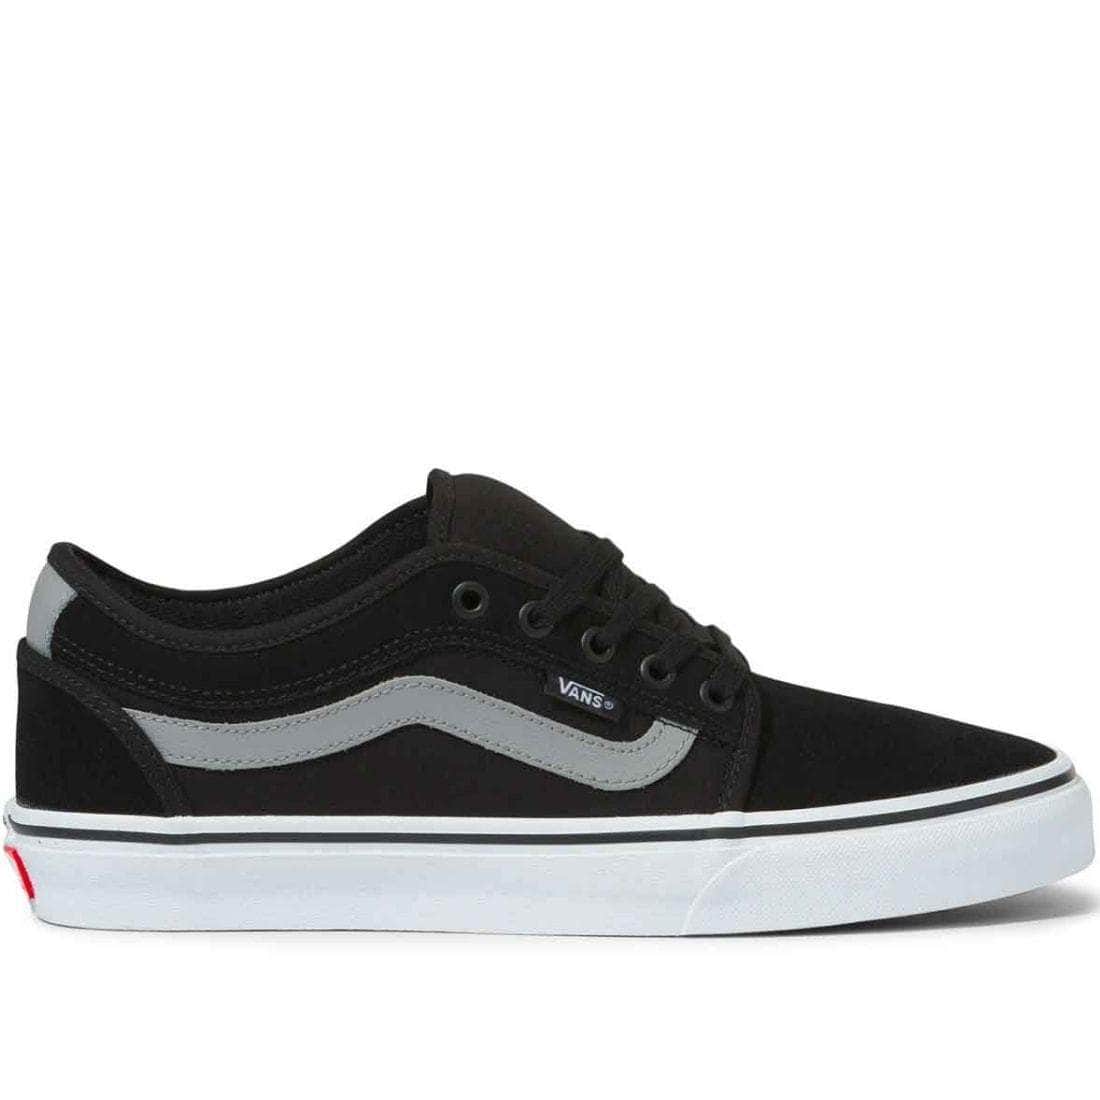 Vans Chukka Low Sidestripe Skate Shoes - Black/Gray/White - Mens Skate Shoes by Vans